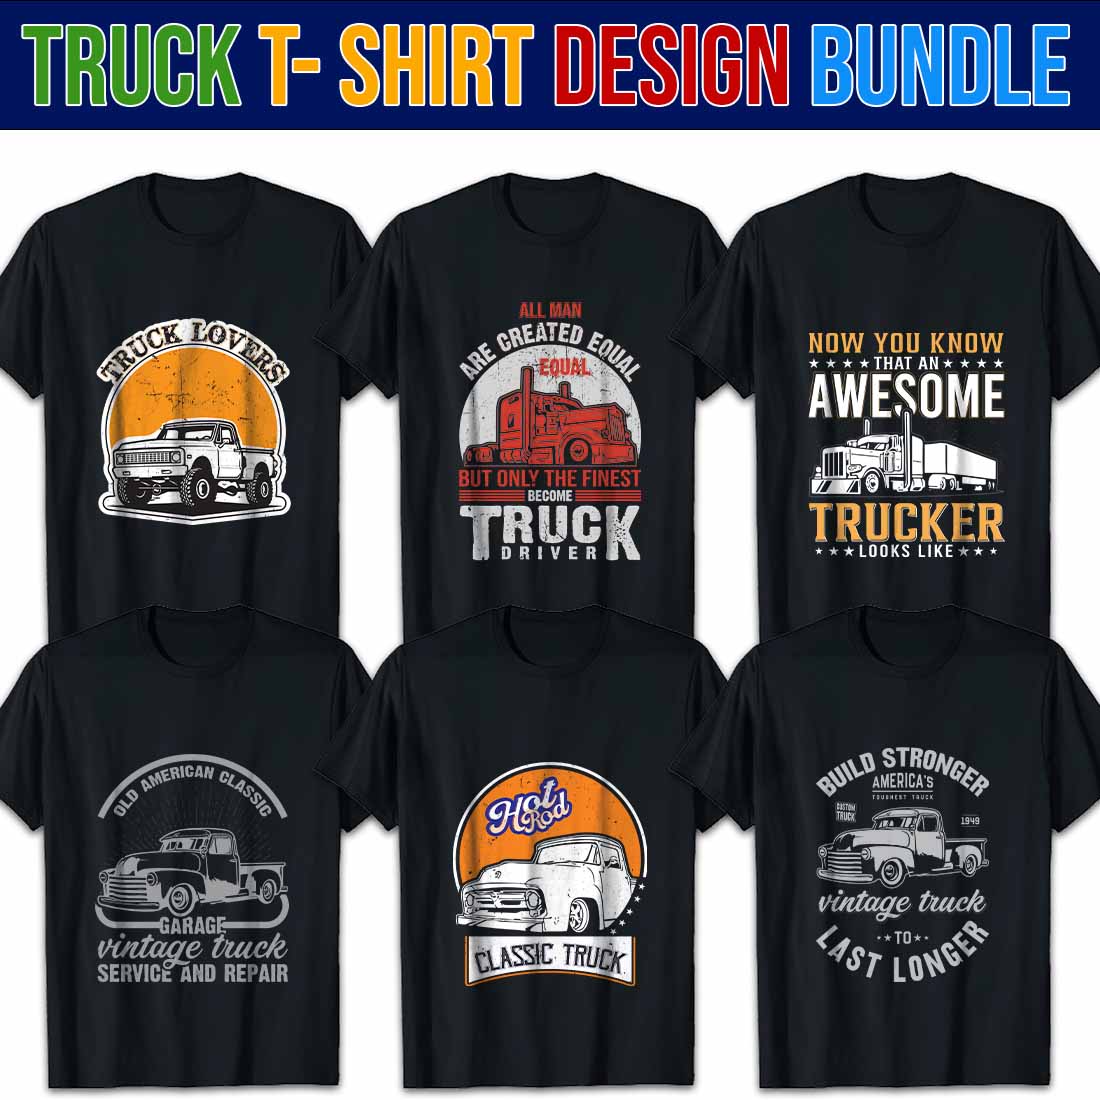 Truck Driver T-Shirt Design Bundle preview image.